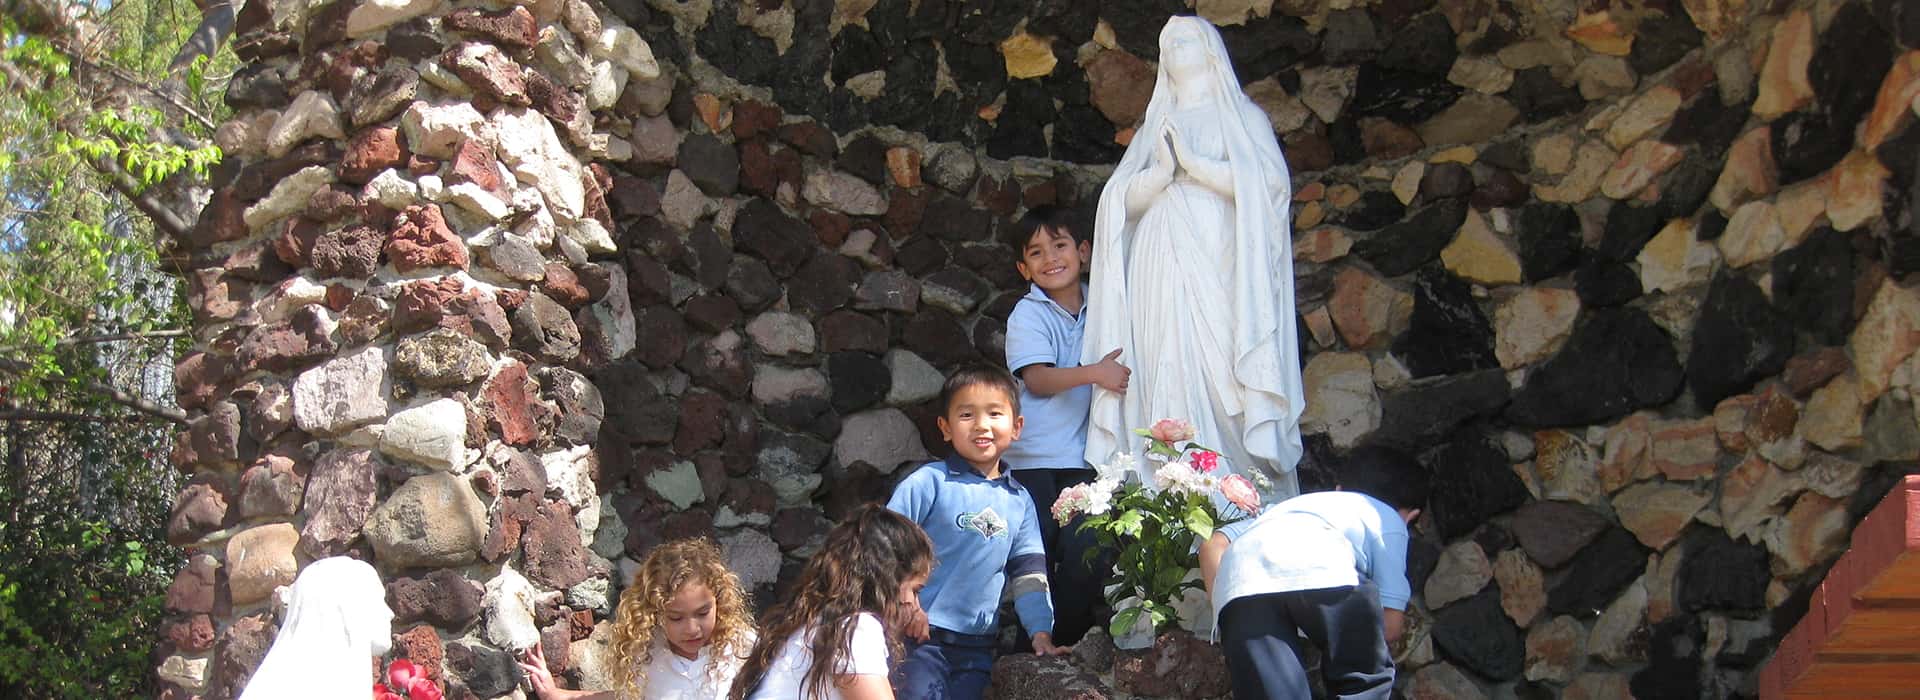 children around Mary statue in grove